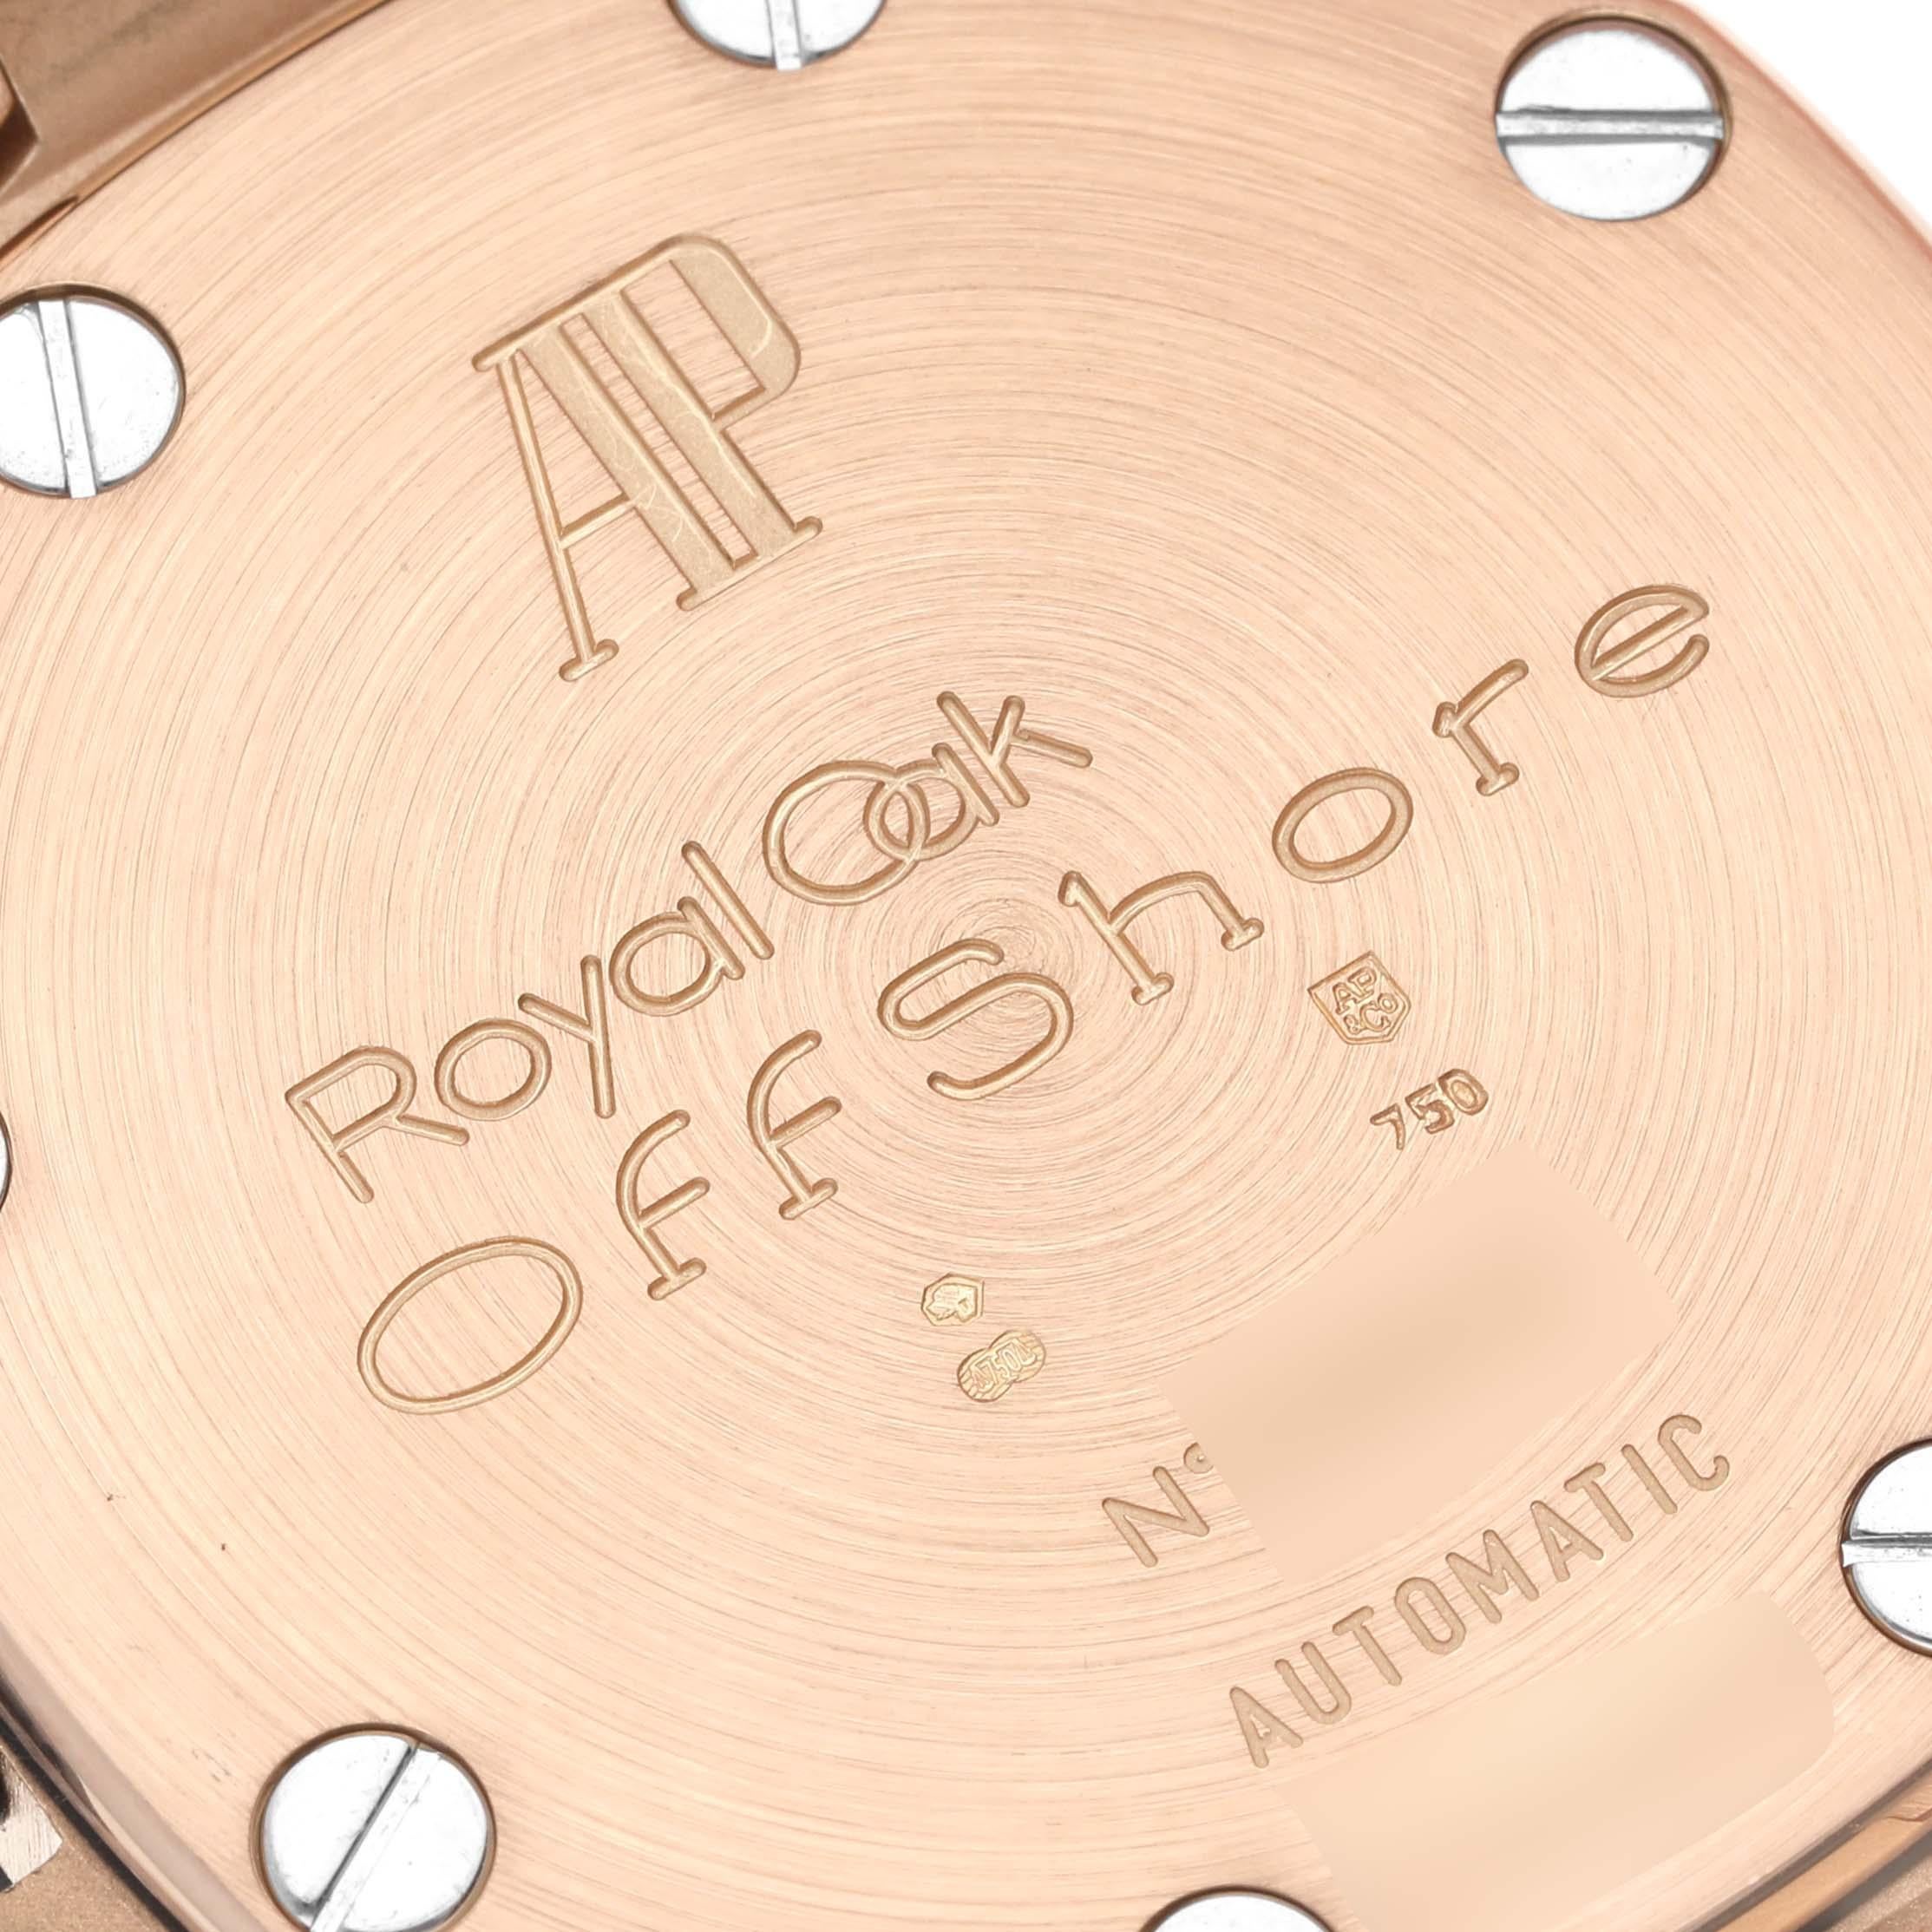 Audemars Piguet Royal Oak Offshore Rose Gold Chronograph Mens Watch 2590OK For Sale 1